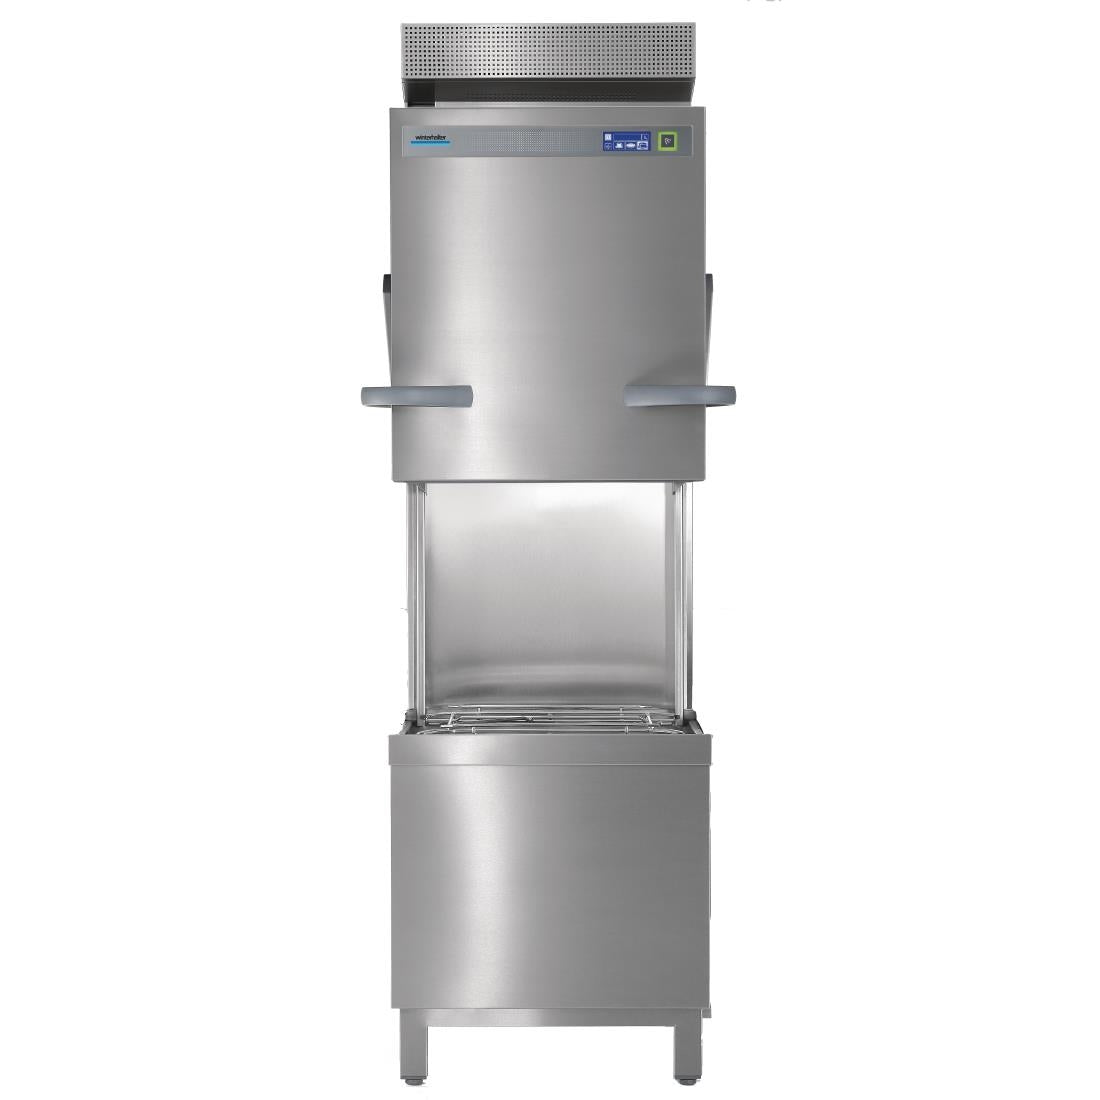 Winterhalter Pass Through Dishwasher PT-XL-1 Energy with Install